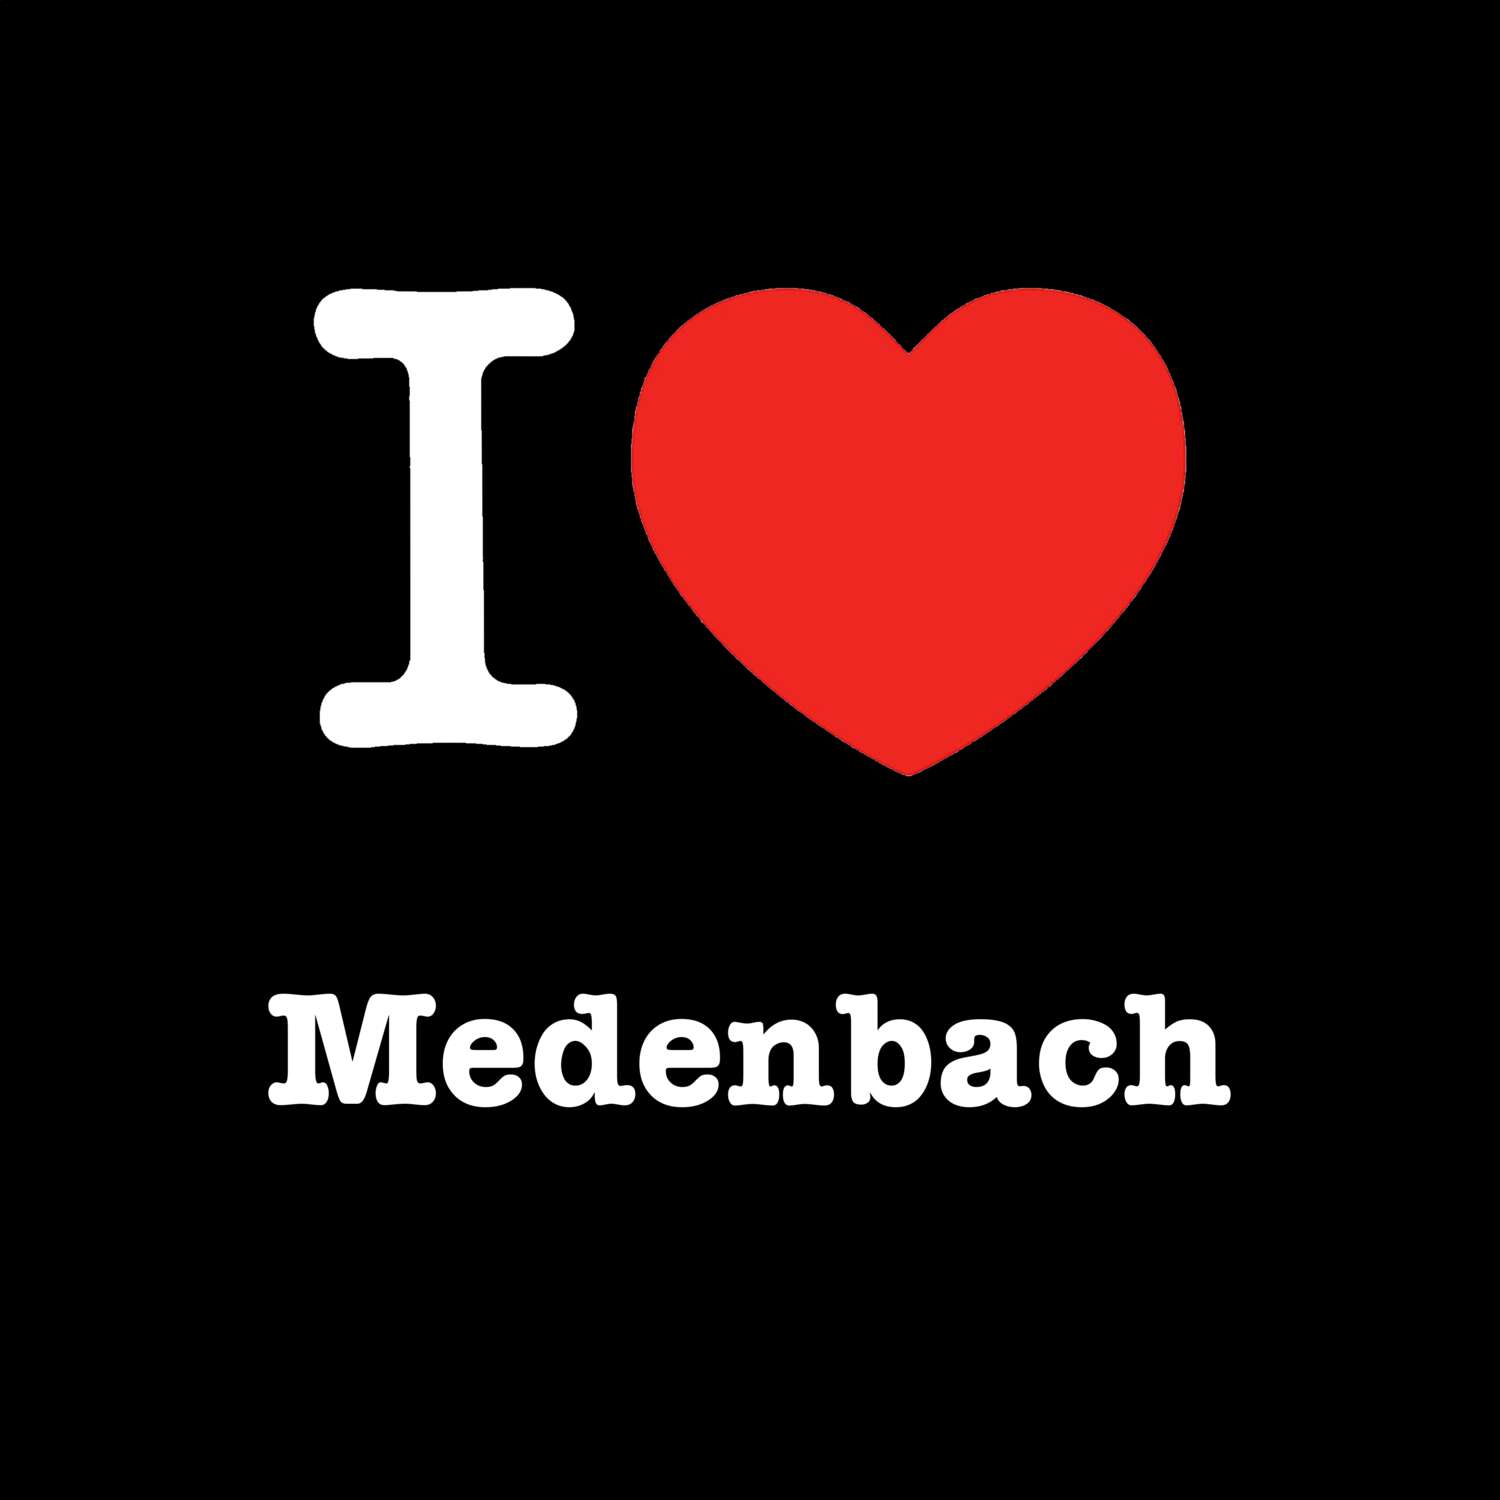 Medenbach T-Shirt »I love«